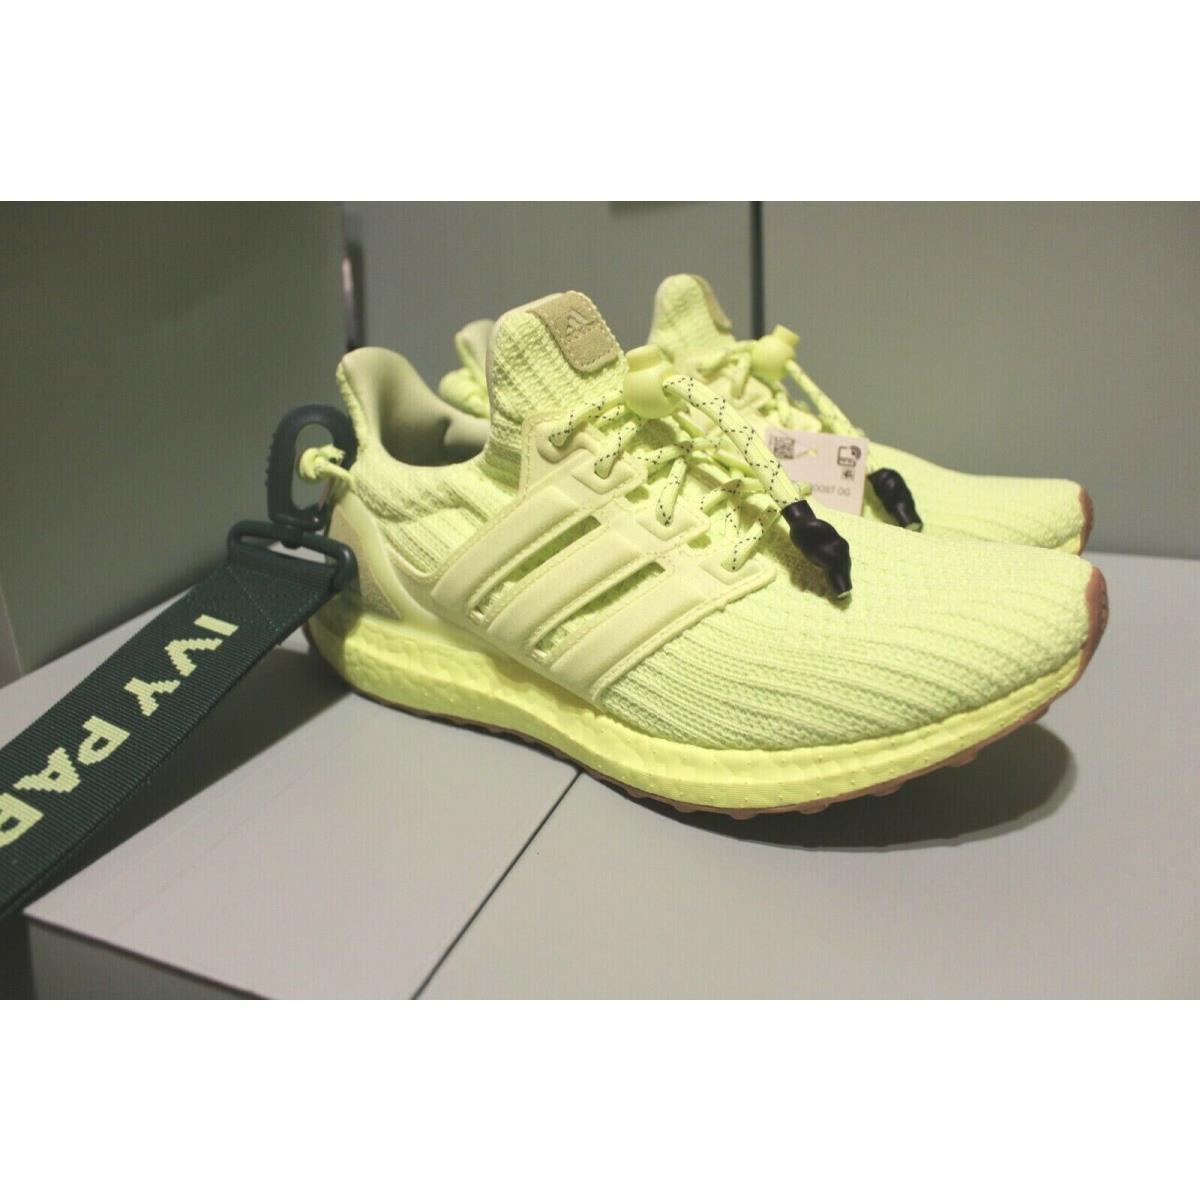 Adidas shoes UltraBoost - Yellow 4